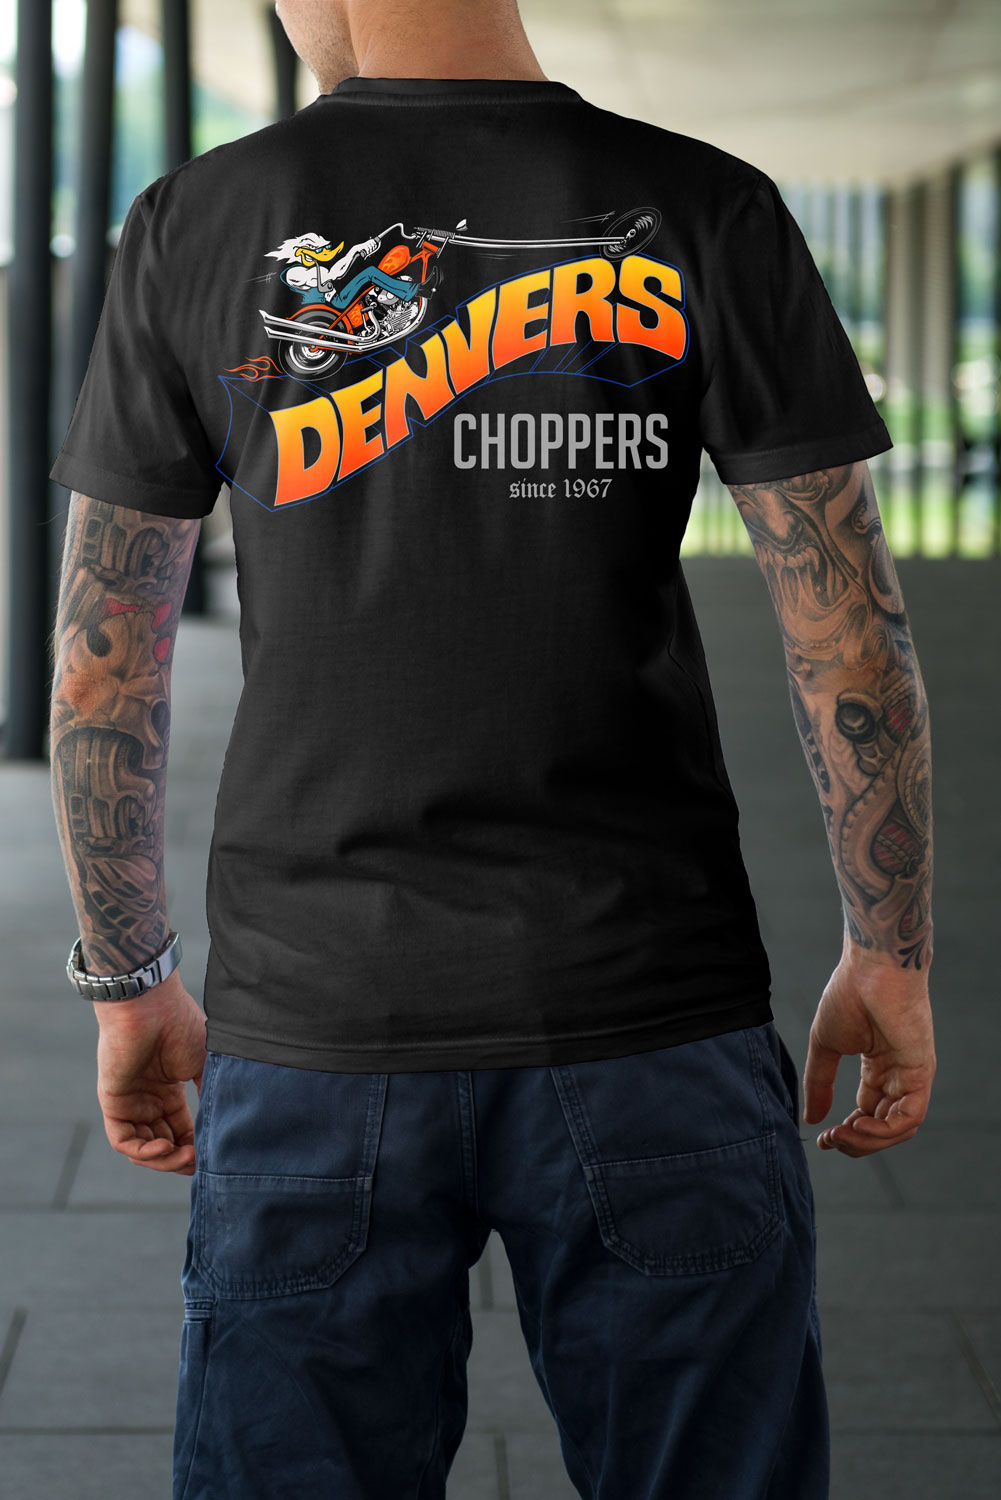 Denver’s Choppers mens T